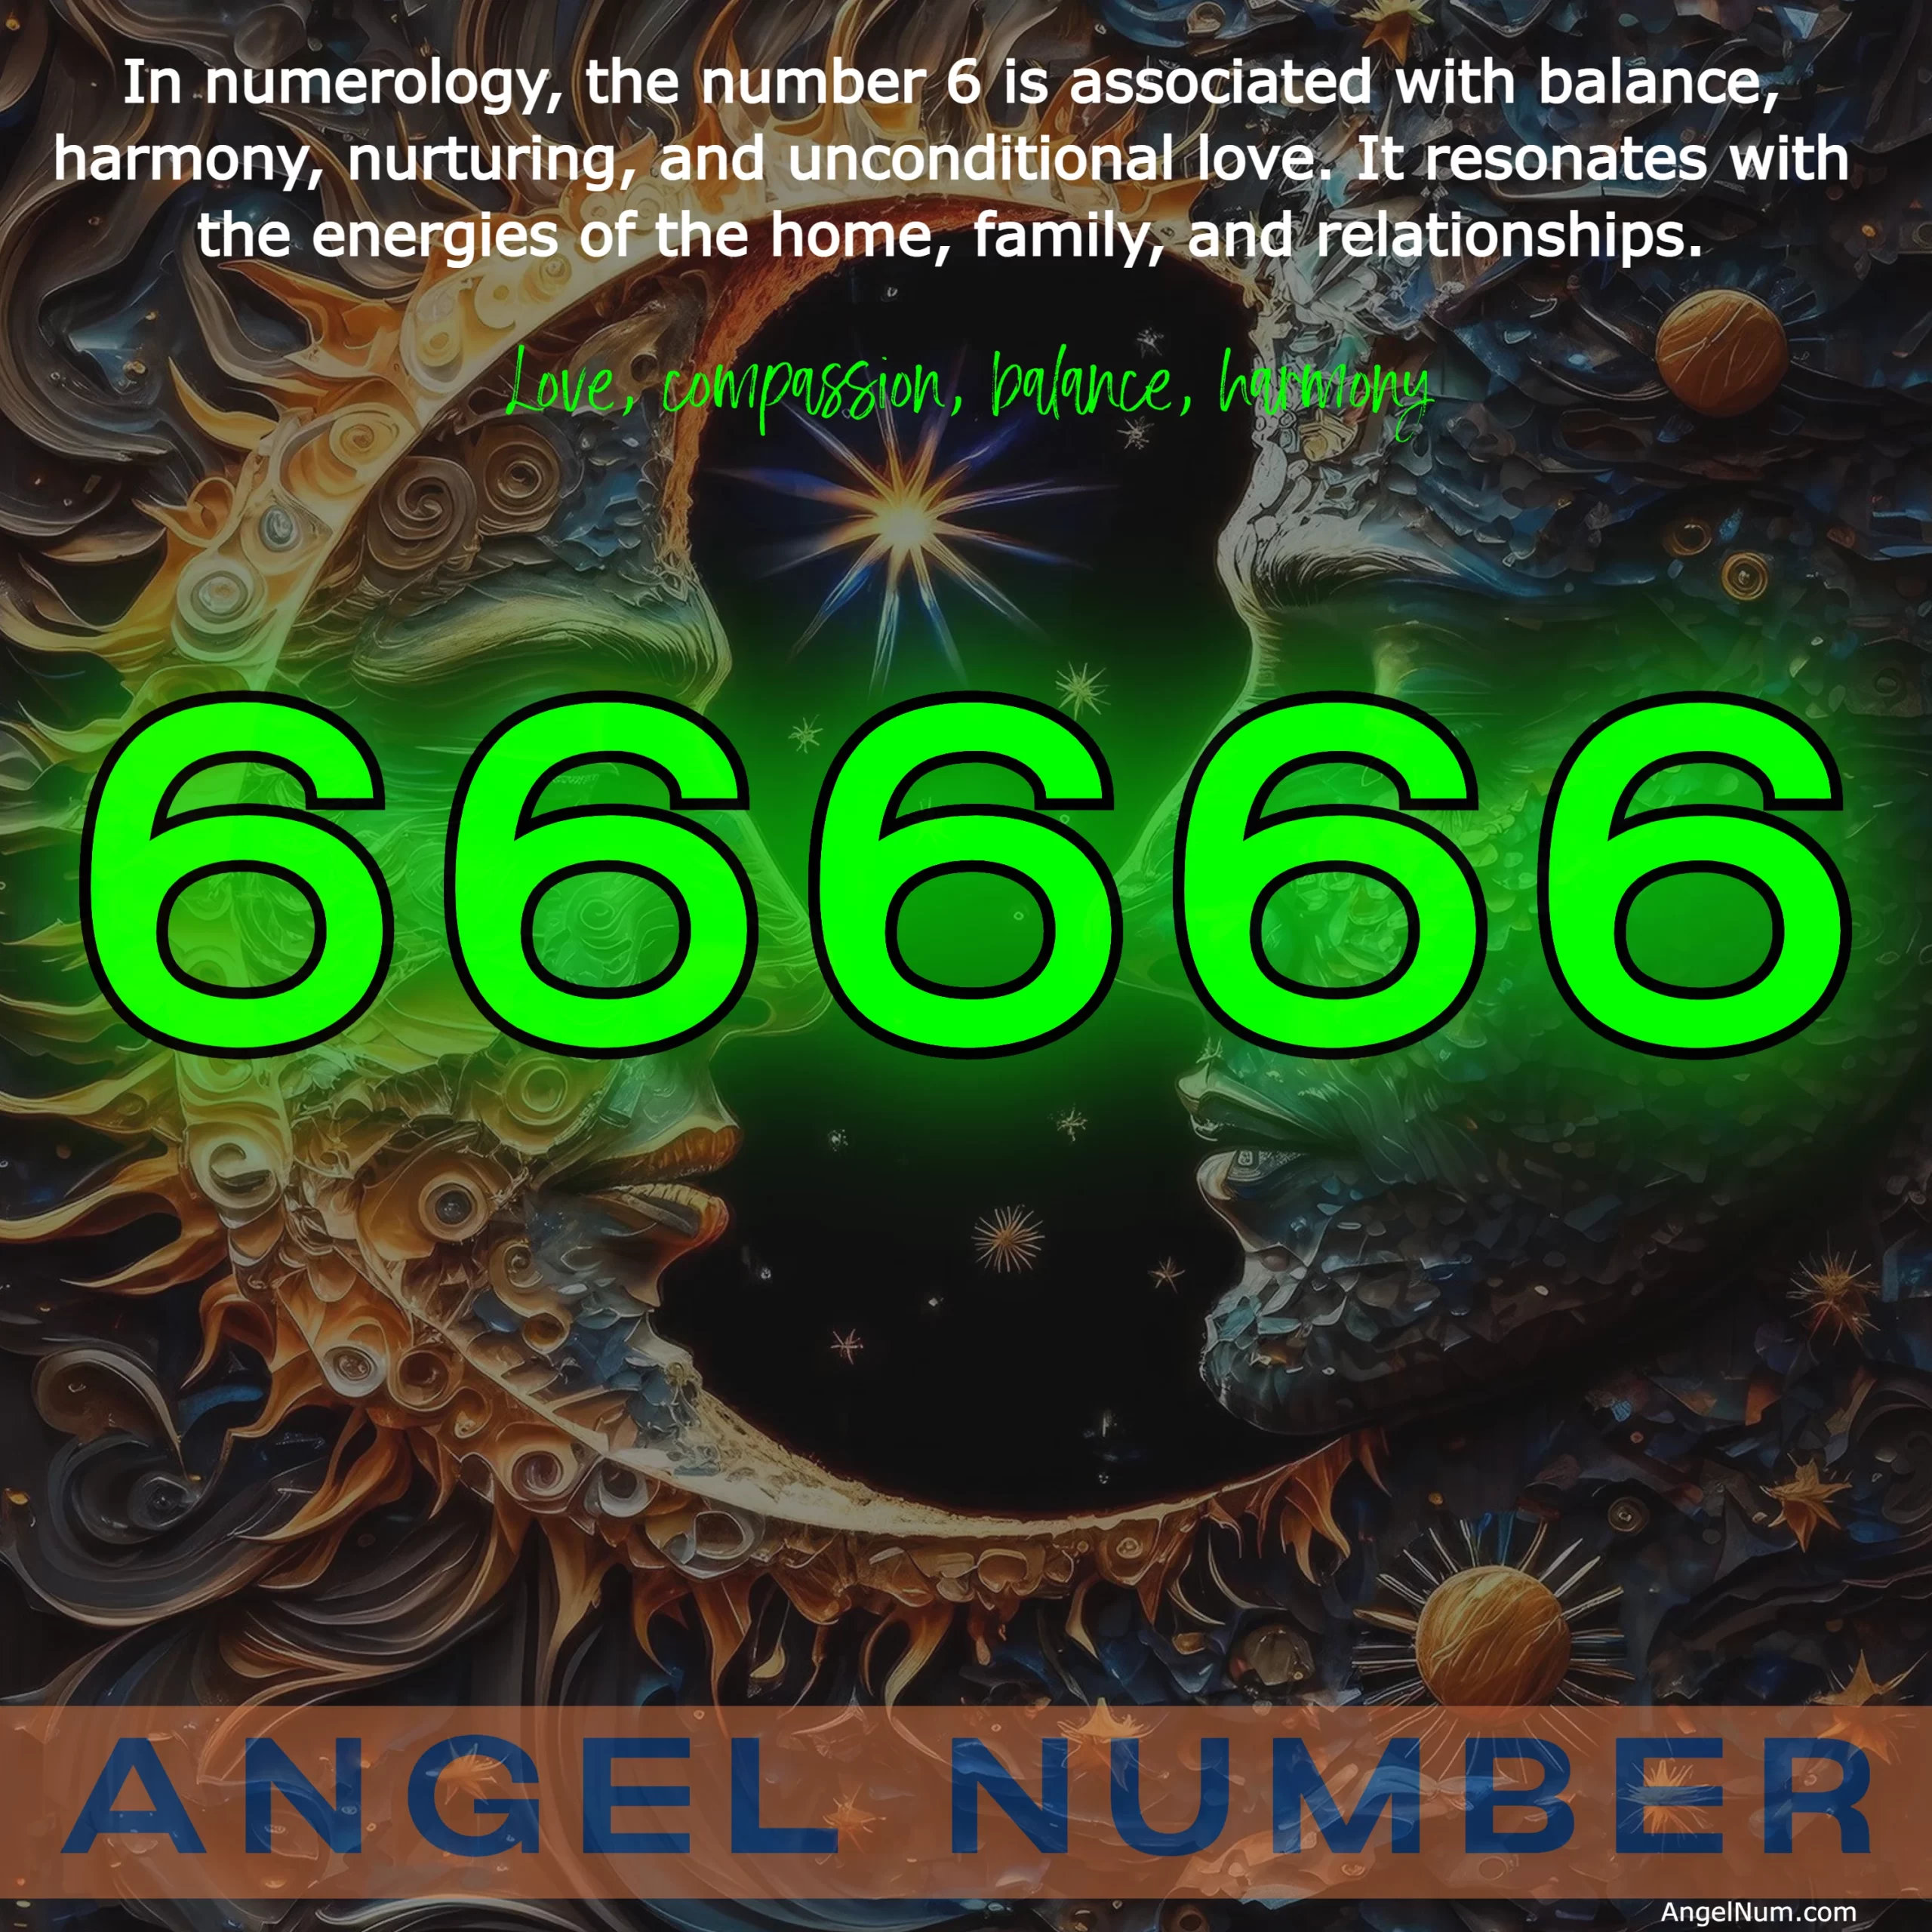 Angel Number 66666: Love Balance and Spiritual Growth